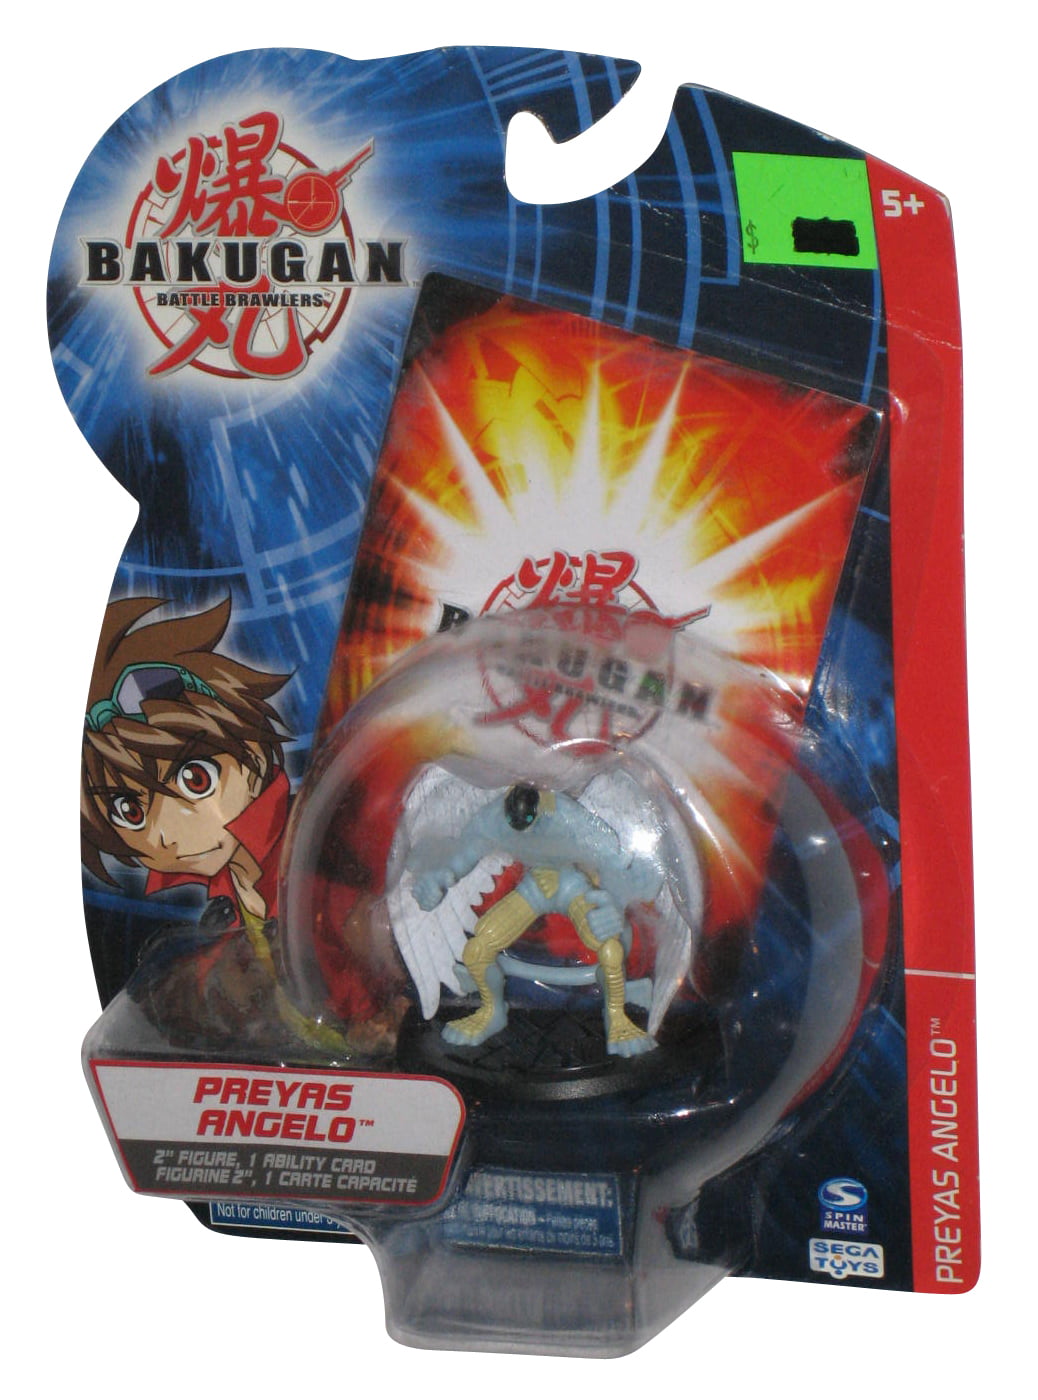 Bakugan Battle Brawlers Preyas (2008) Spin Master 2-Inch Figure w/ Card - Walmart.com